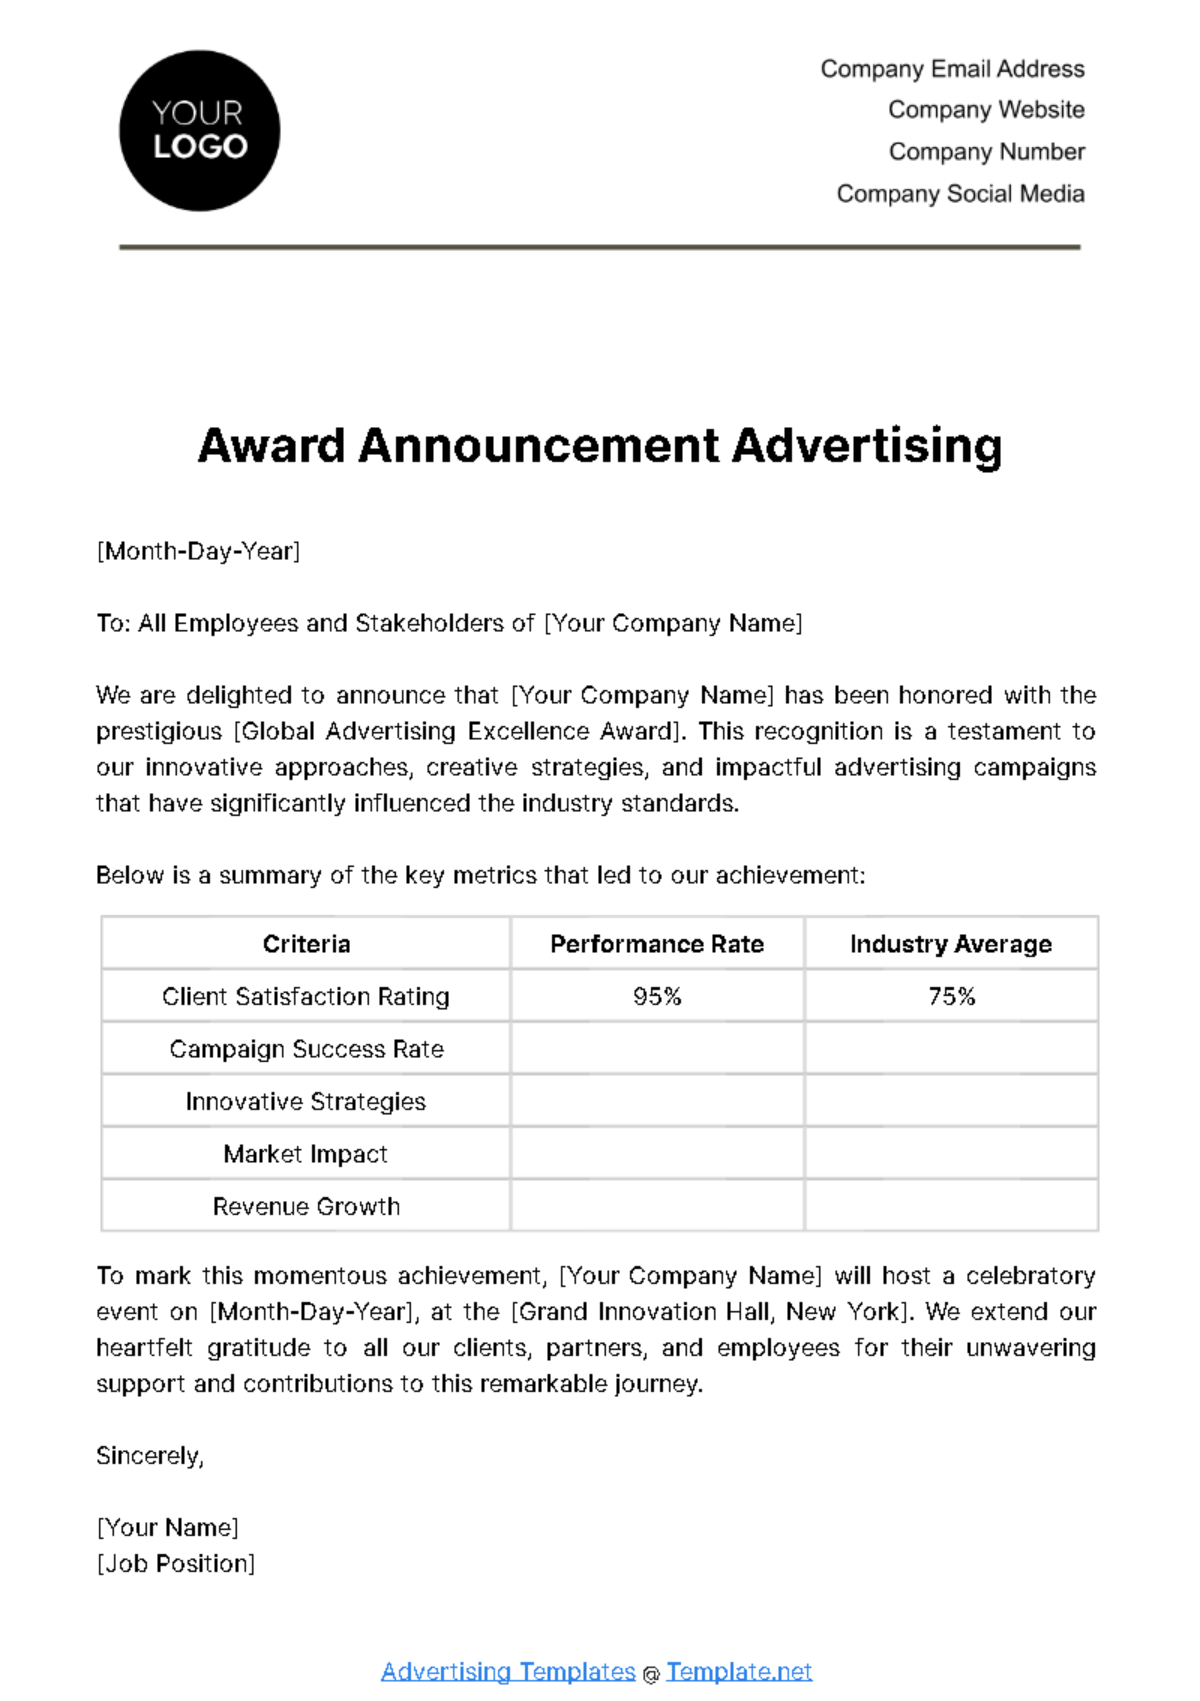 Award Announcement Advertising Template